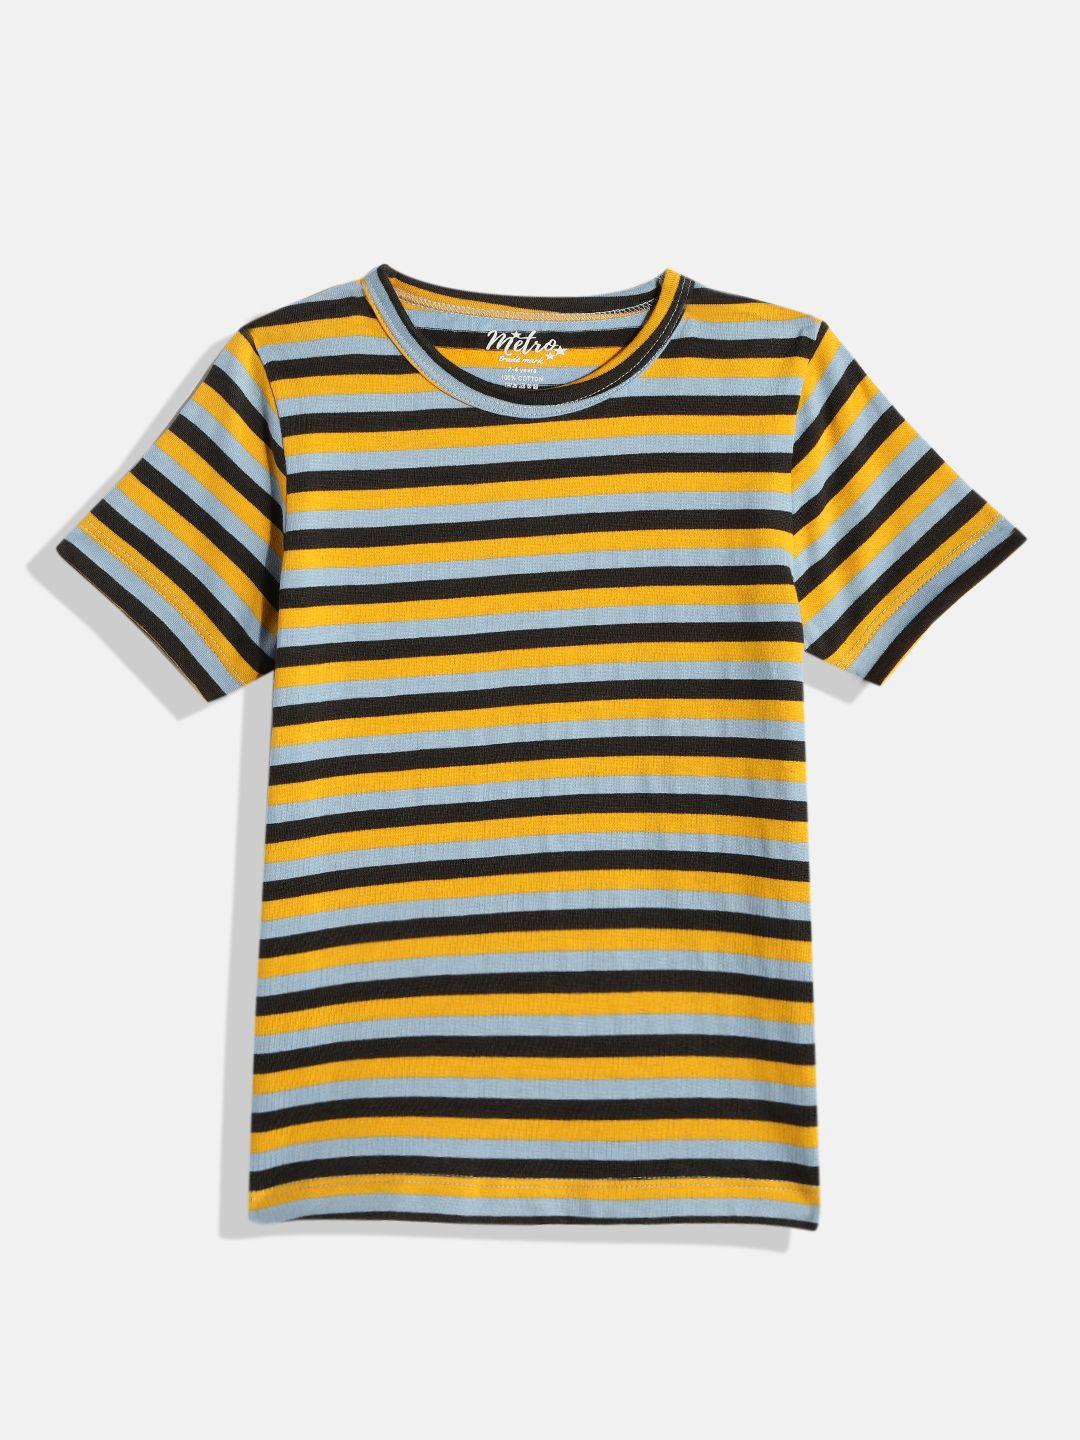 metro kids company boys yellow & black striped t-shirt